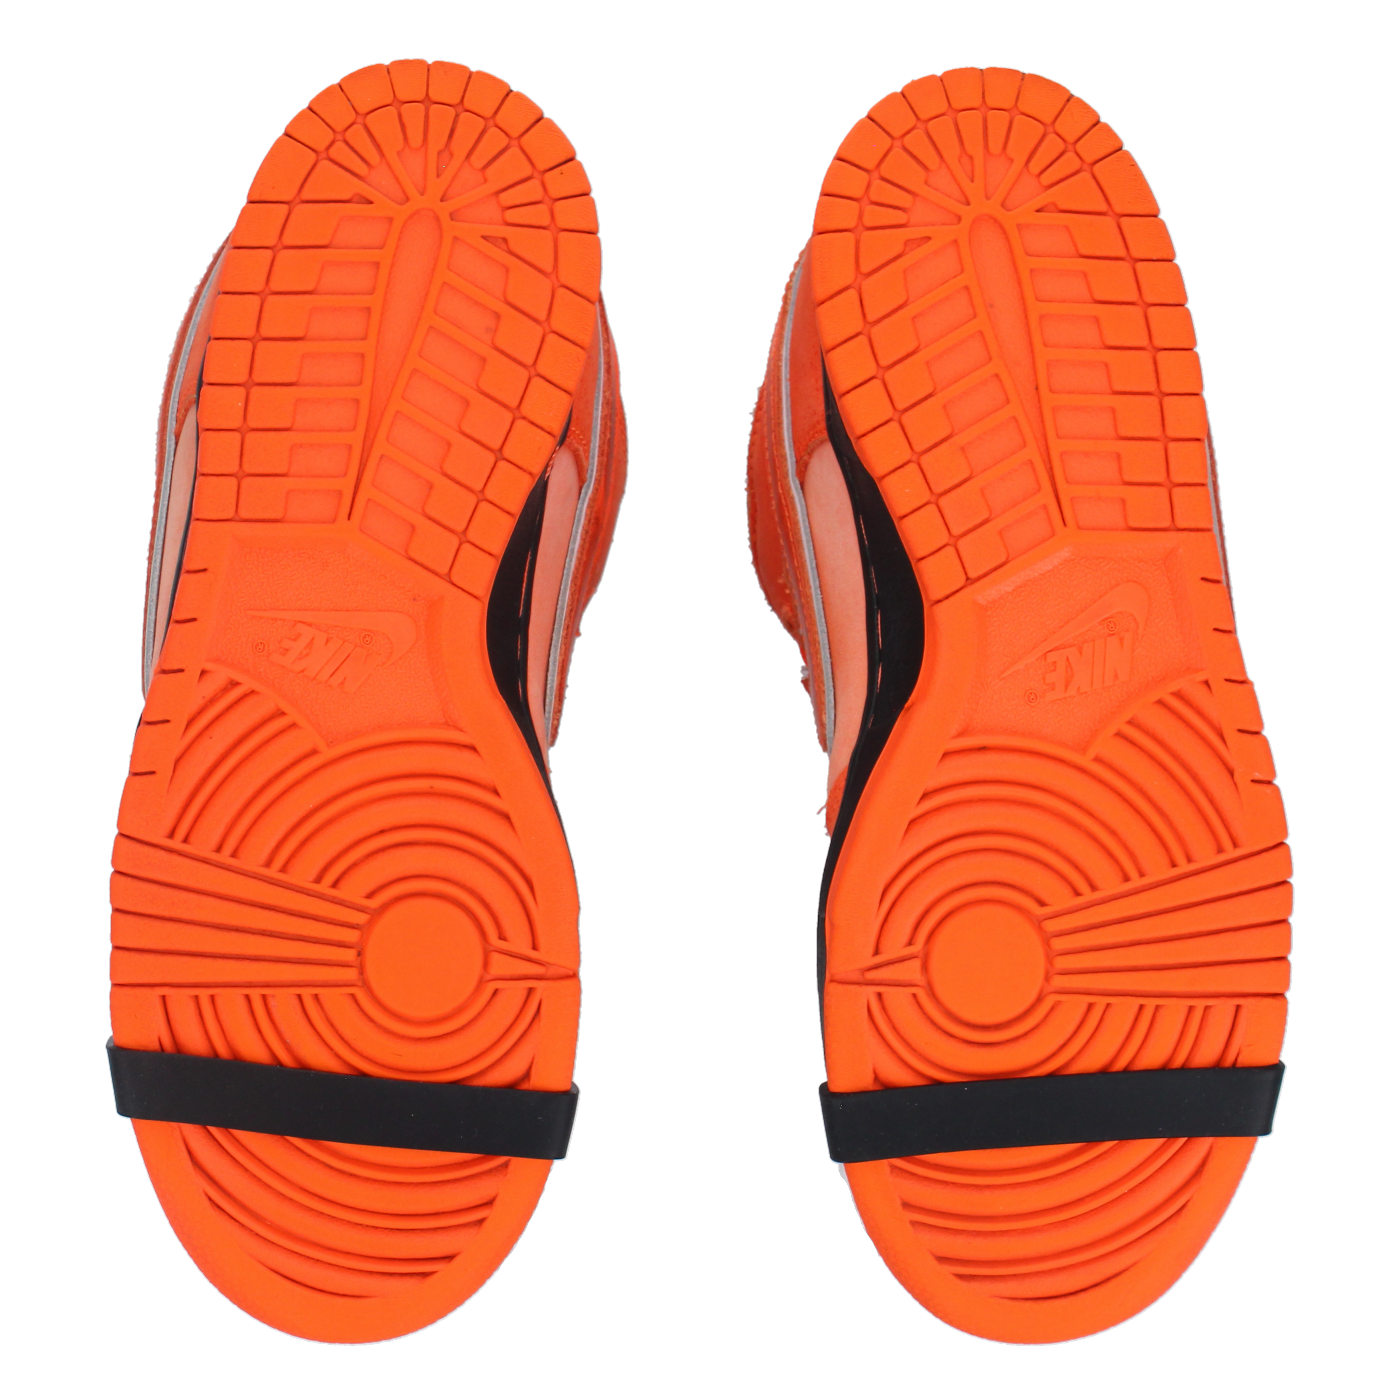 Concepts X Nike SB Dunk Low 'Orange Lobster'